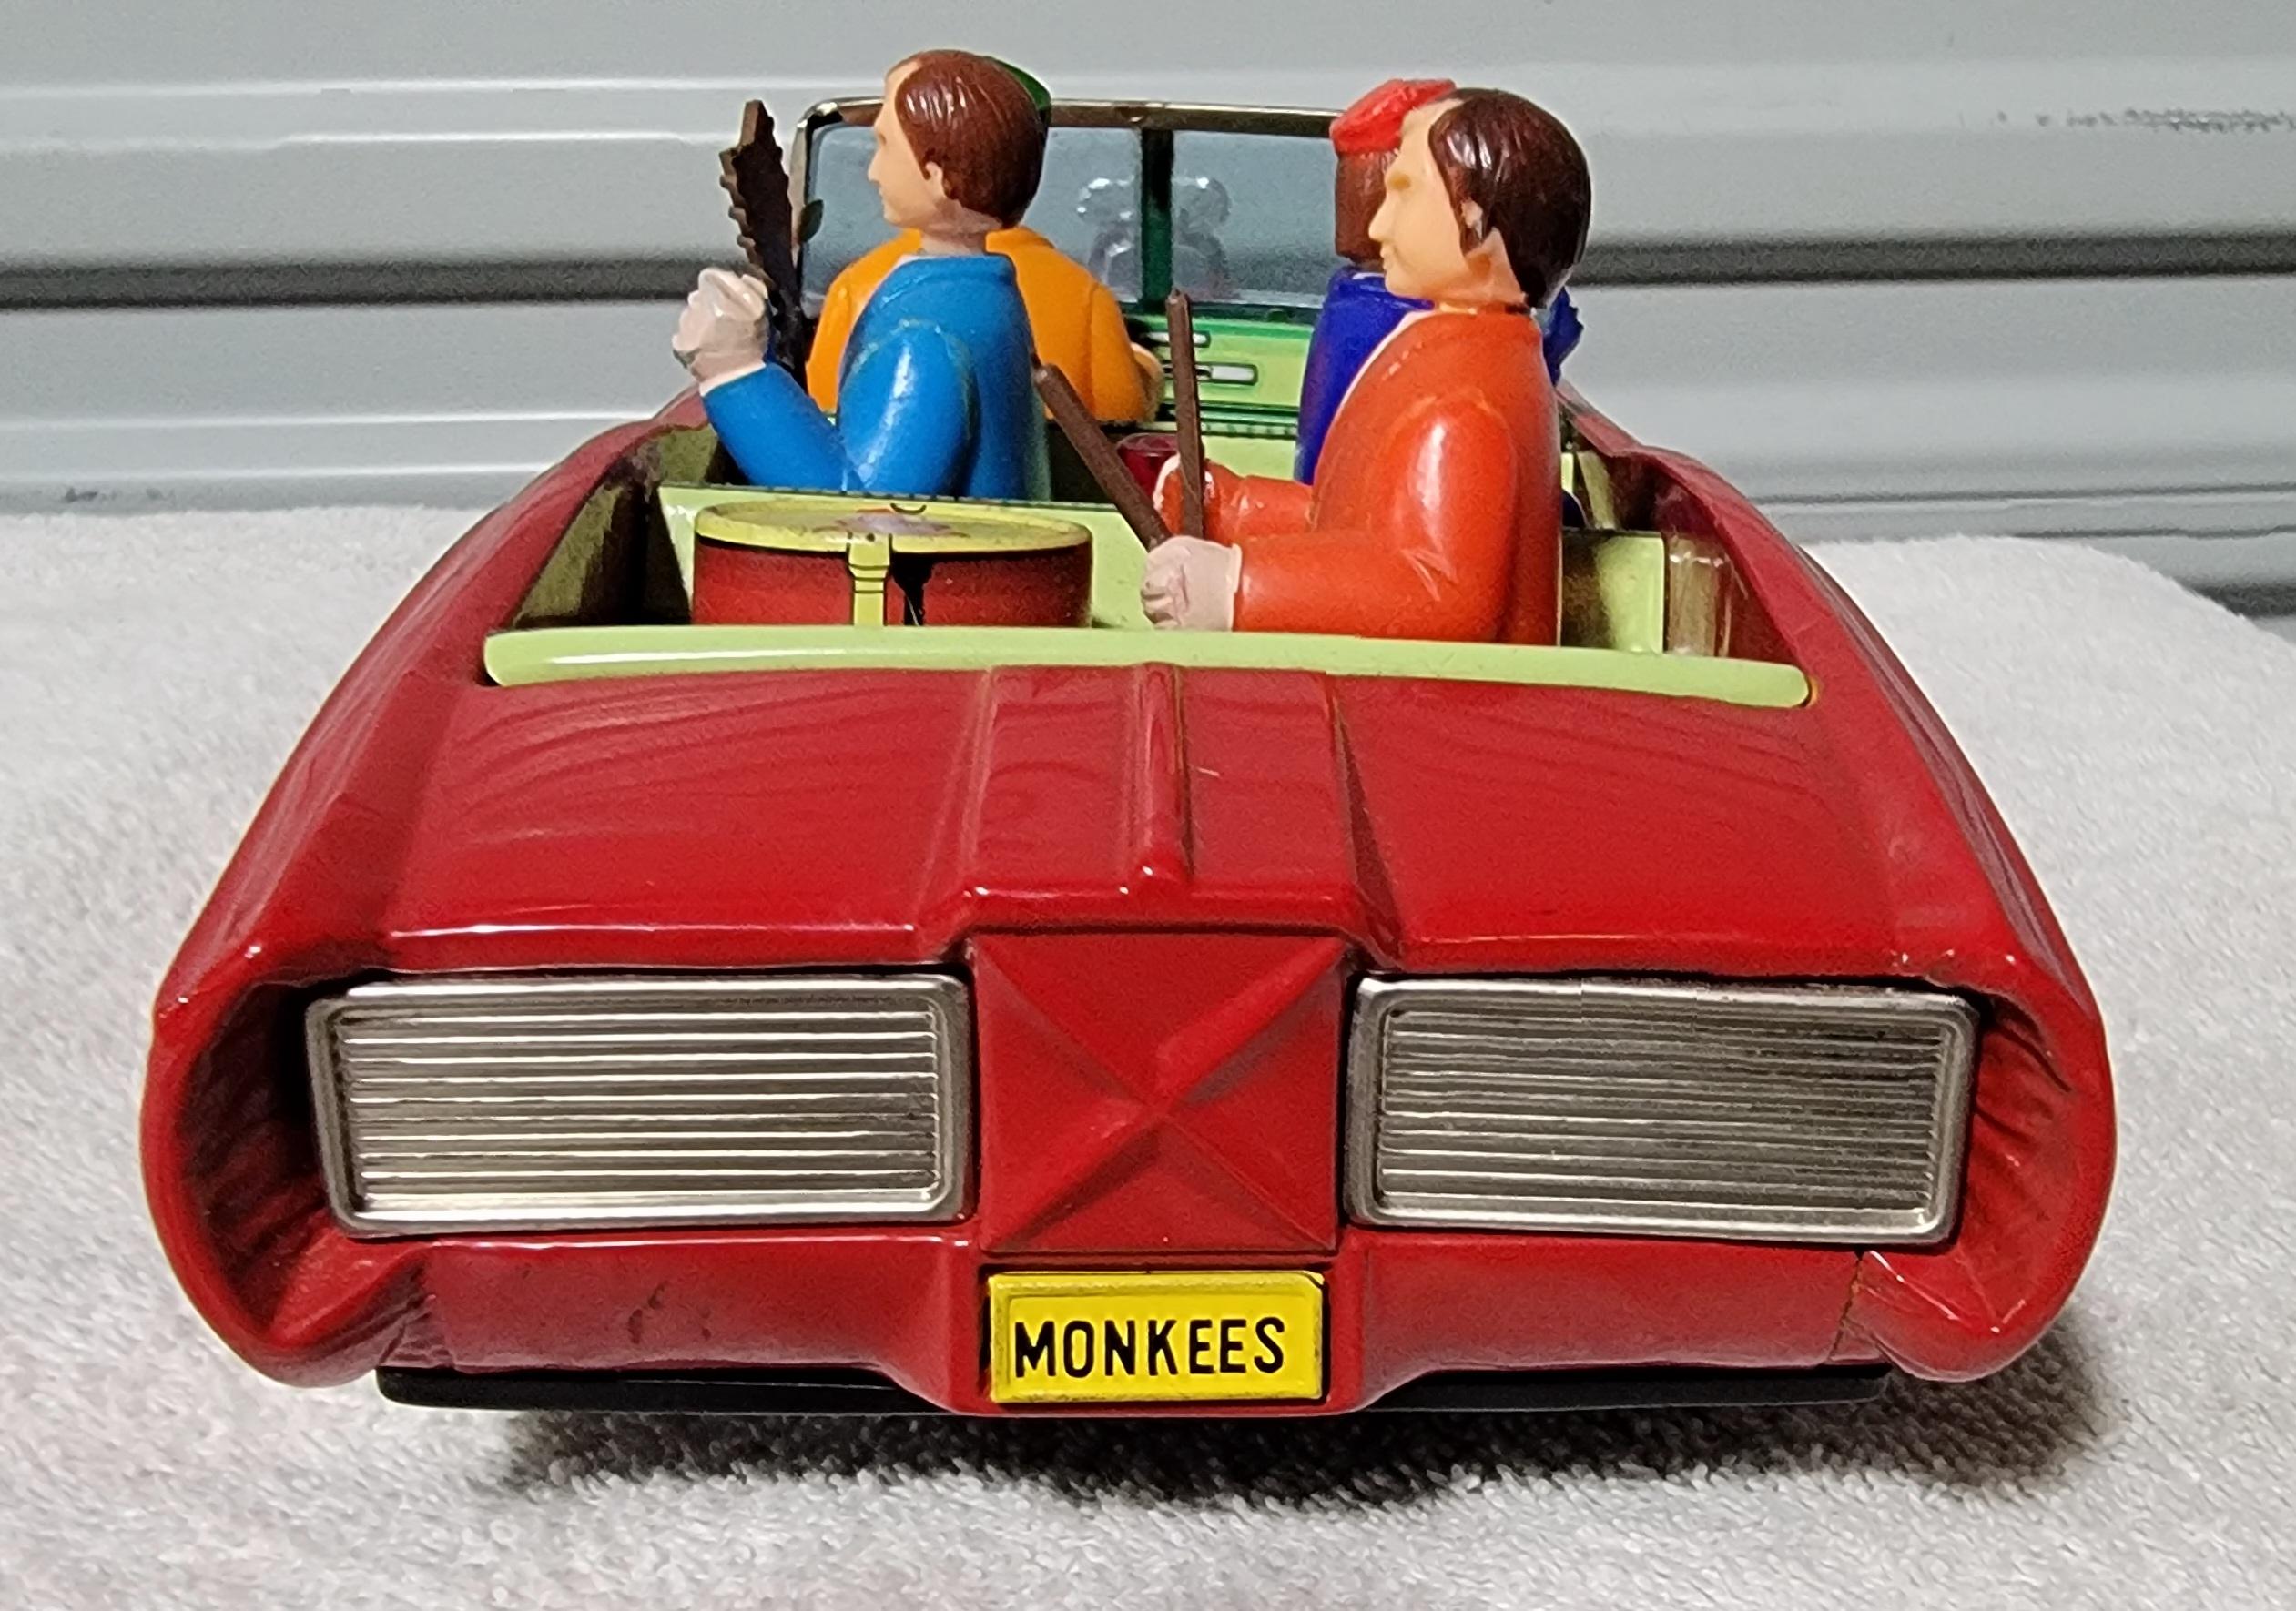 Monkeys Monkee-Mobile Toy Car 2